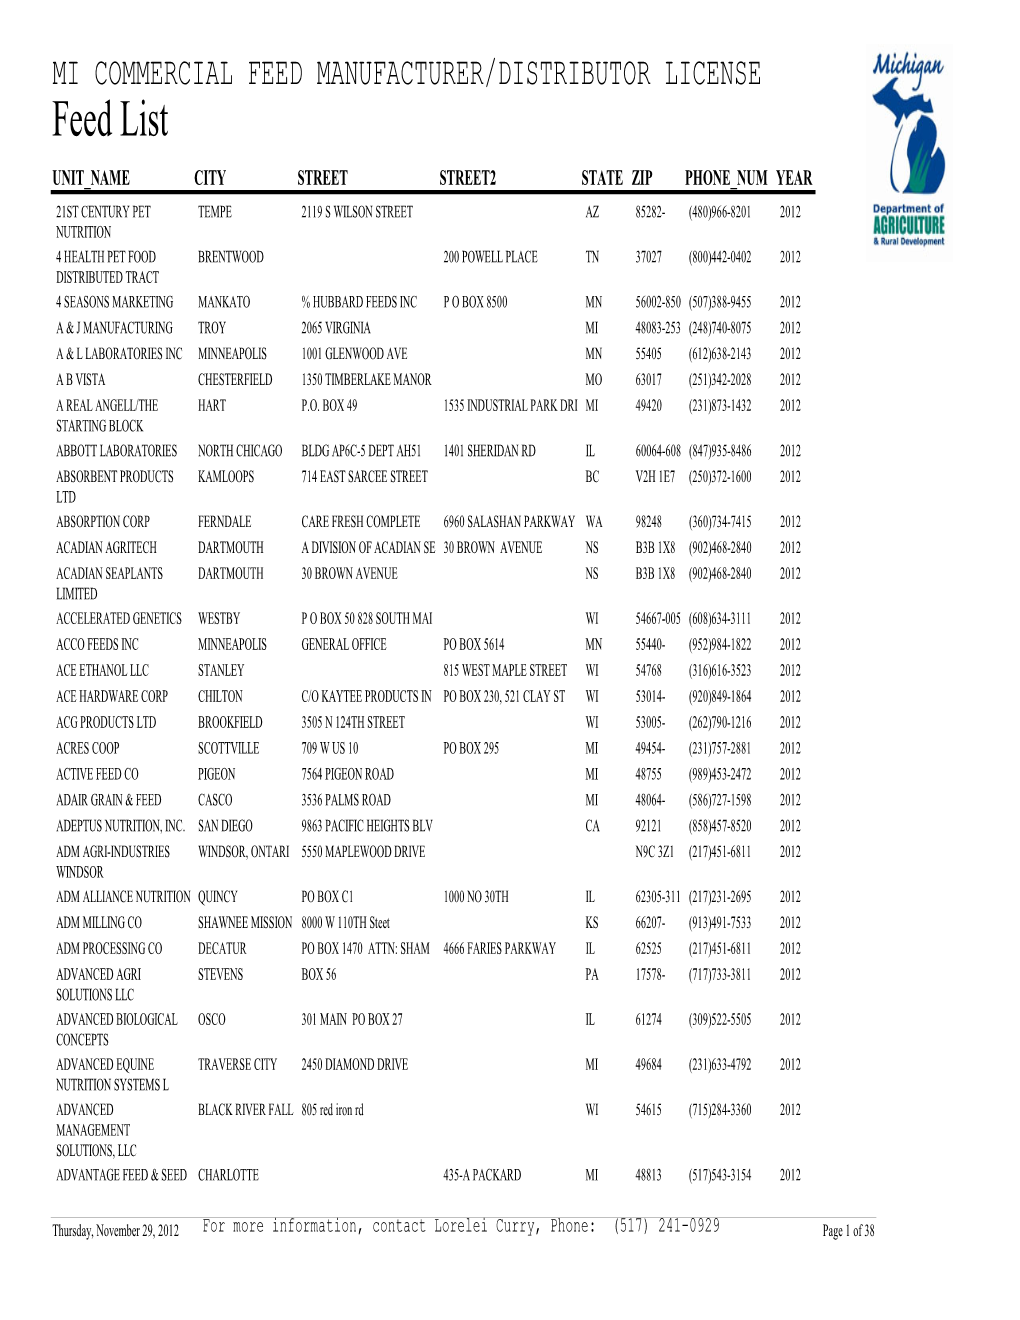 MI Commercial Feed Manufacturer/Distributor License List